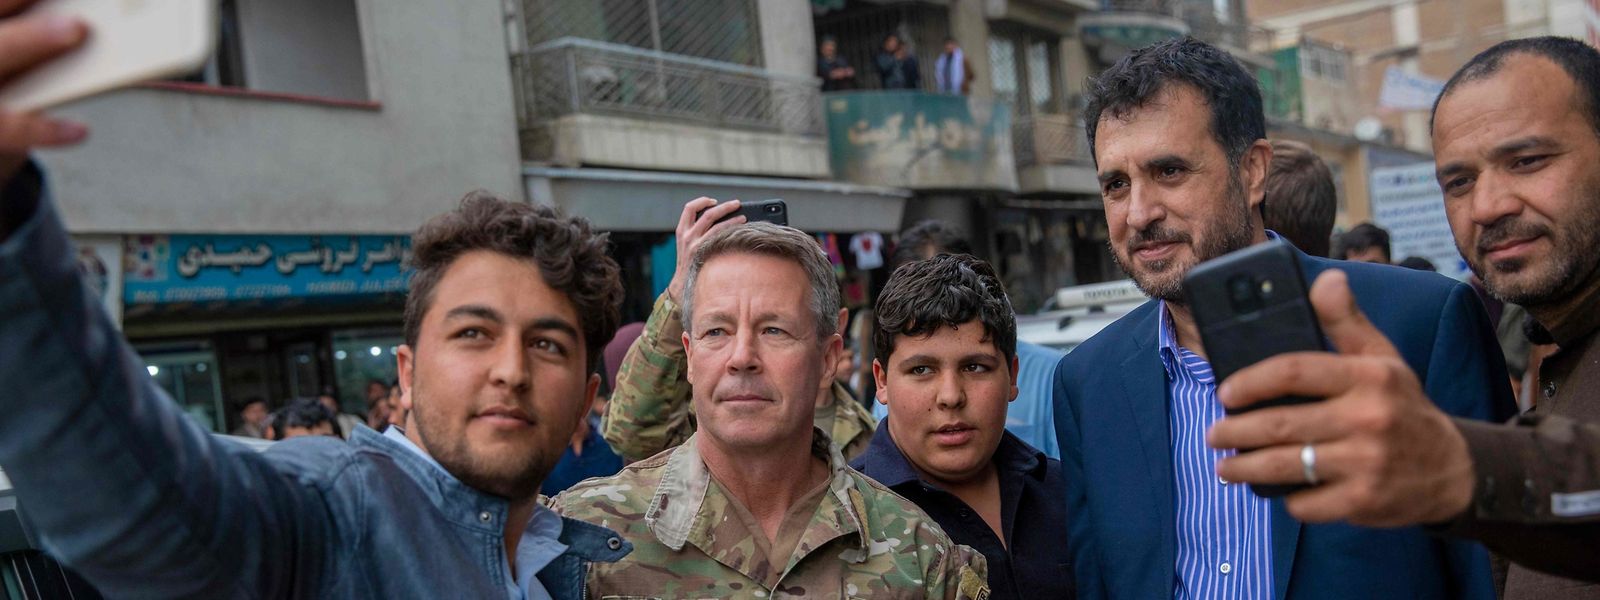 Der US-Truppen-Kommandeur schießt Selfies mit Afghanen.